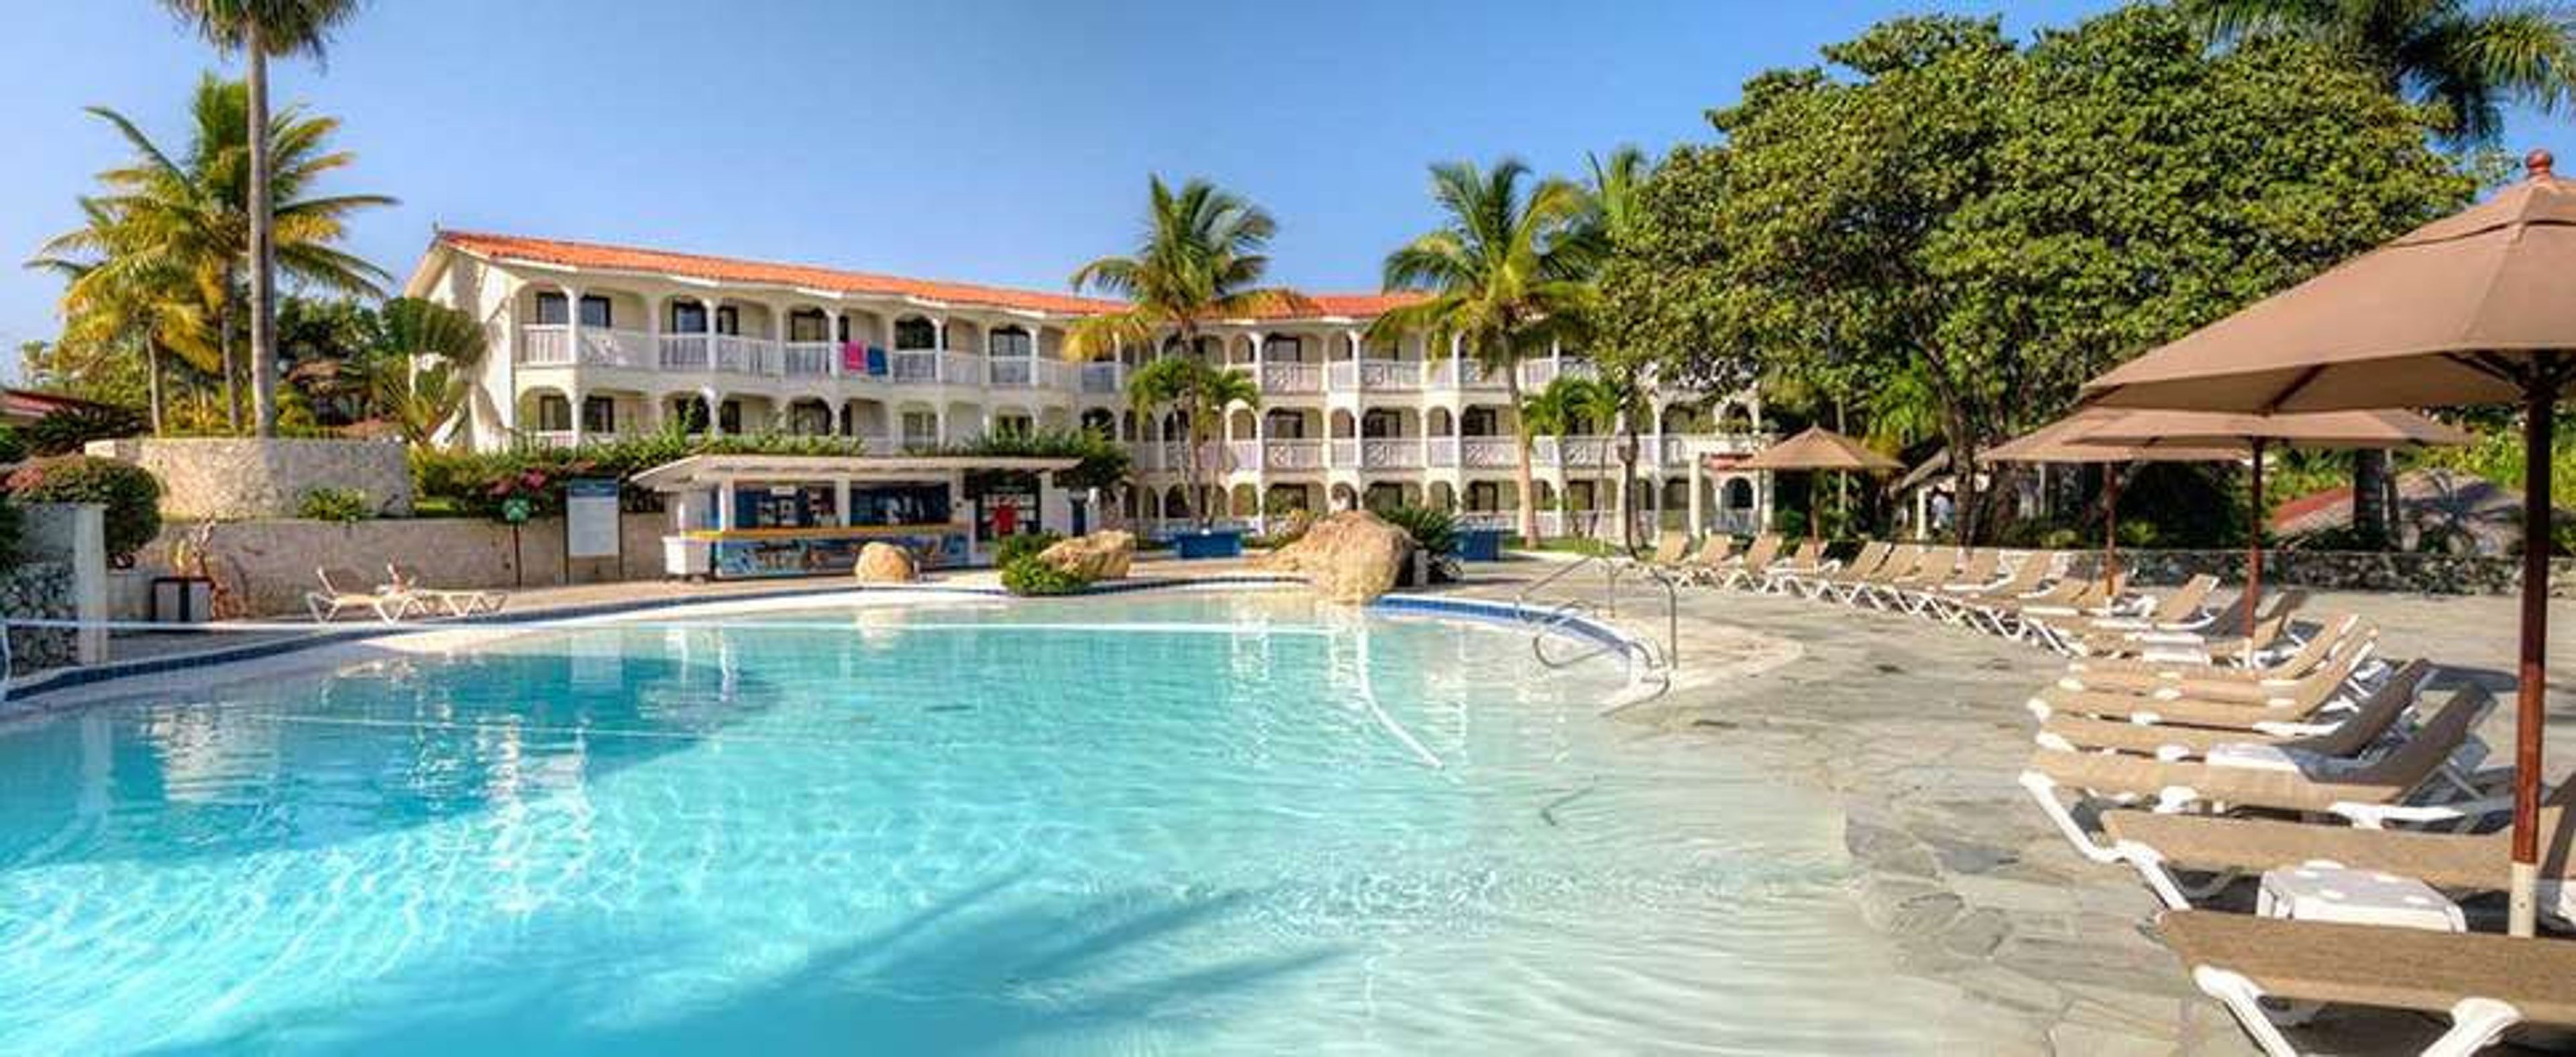 Cofresi Palm Beach & Spa Resort foto 2